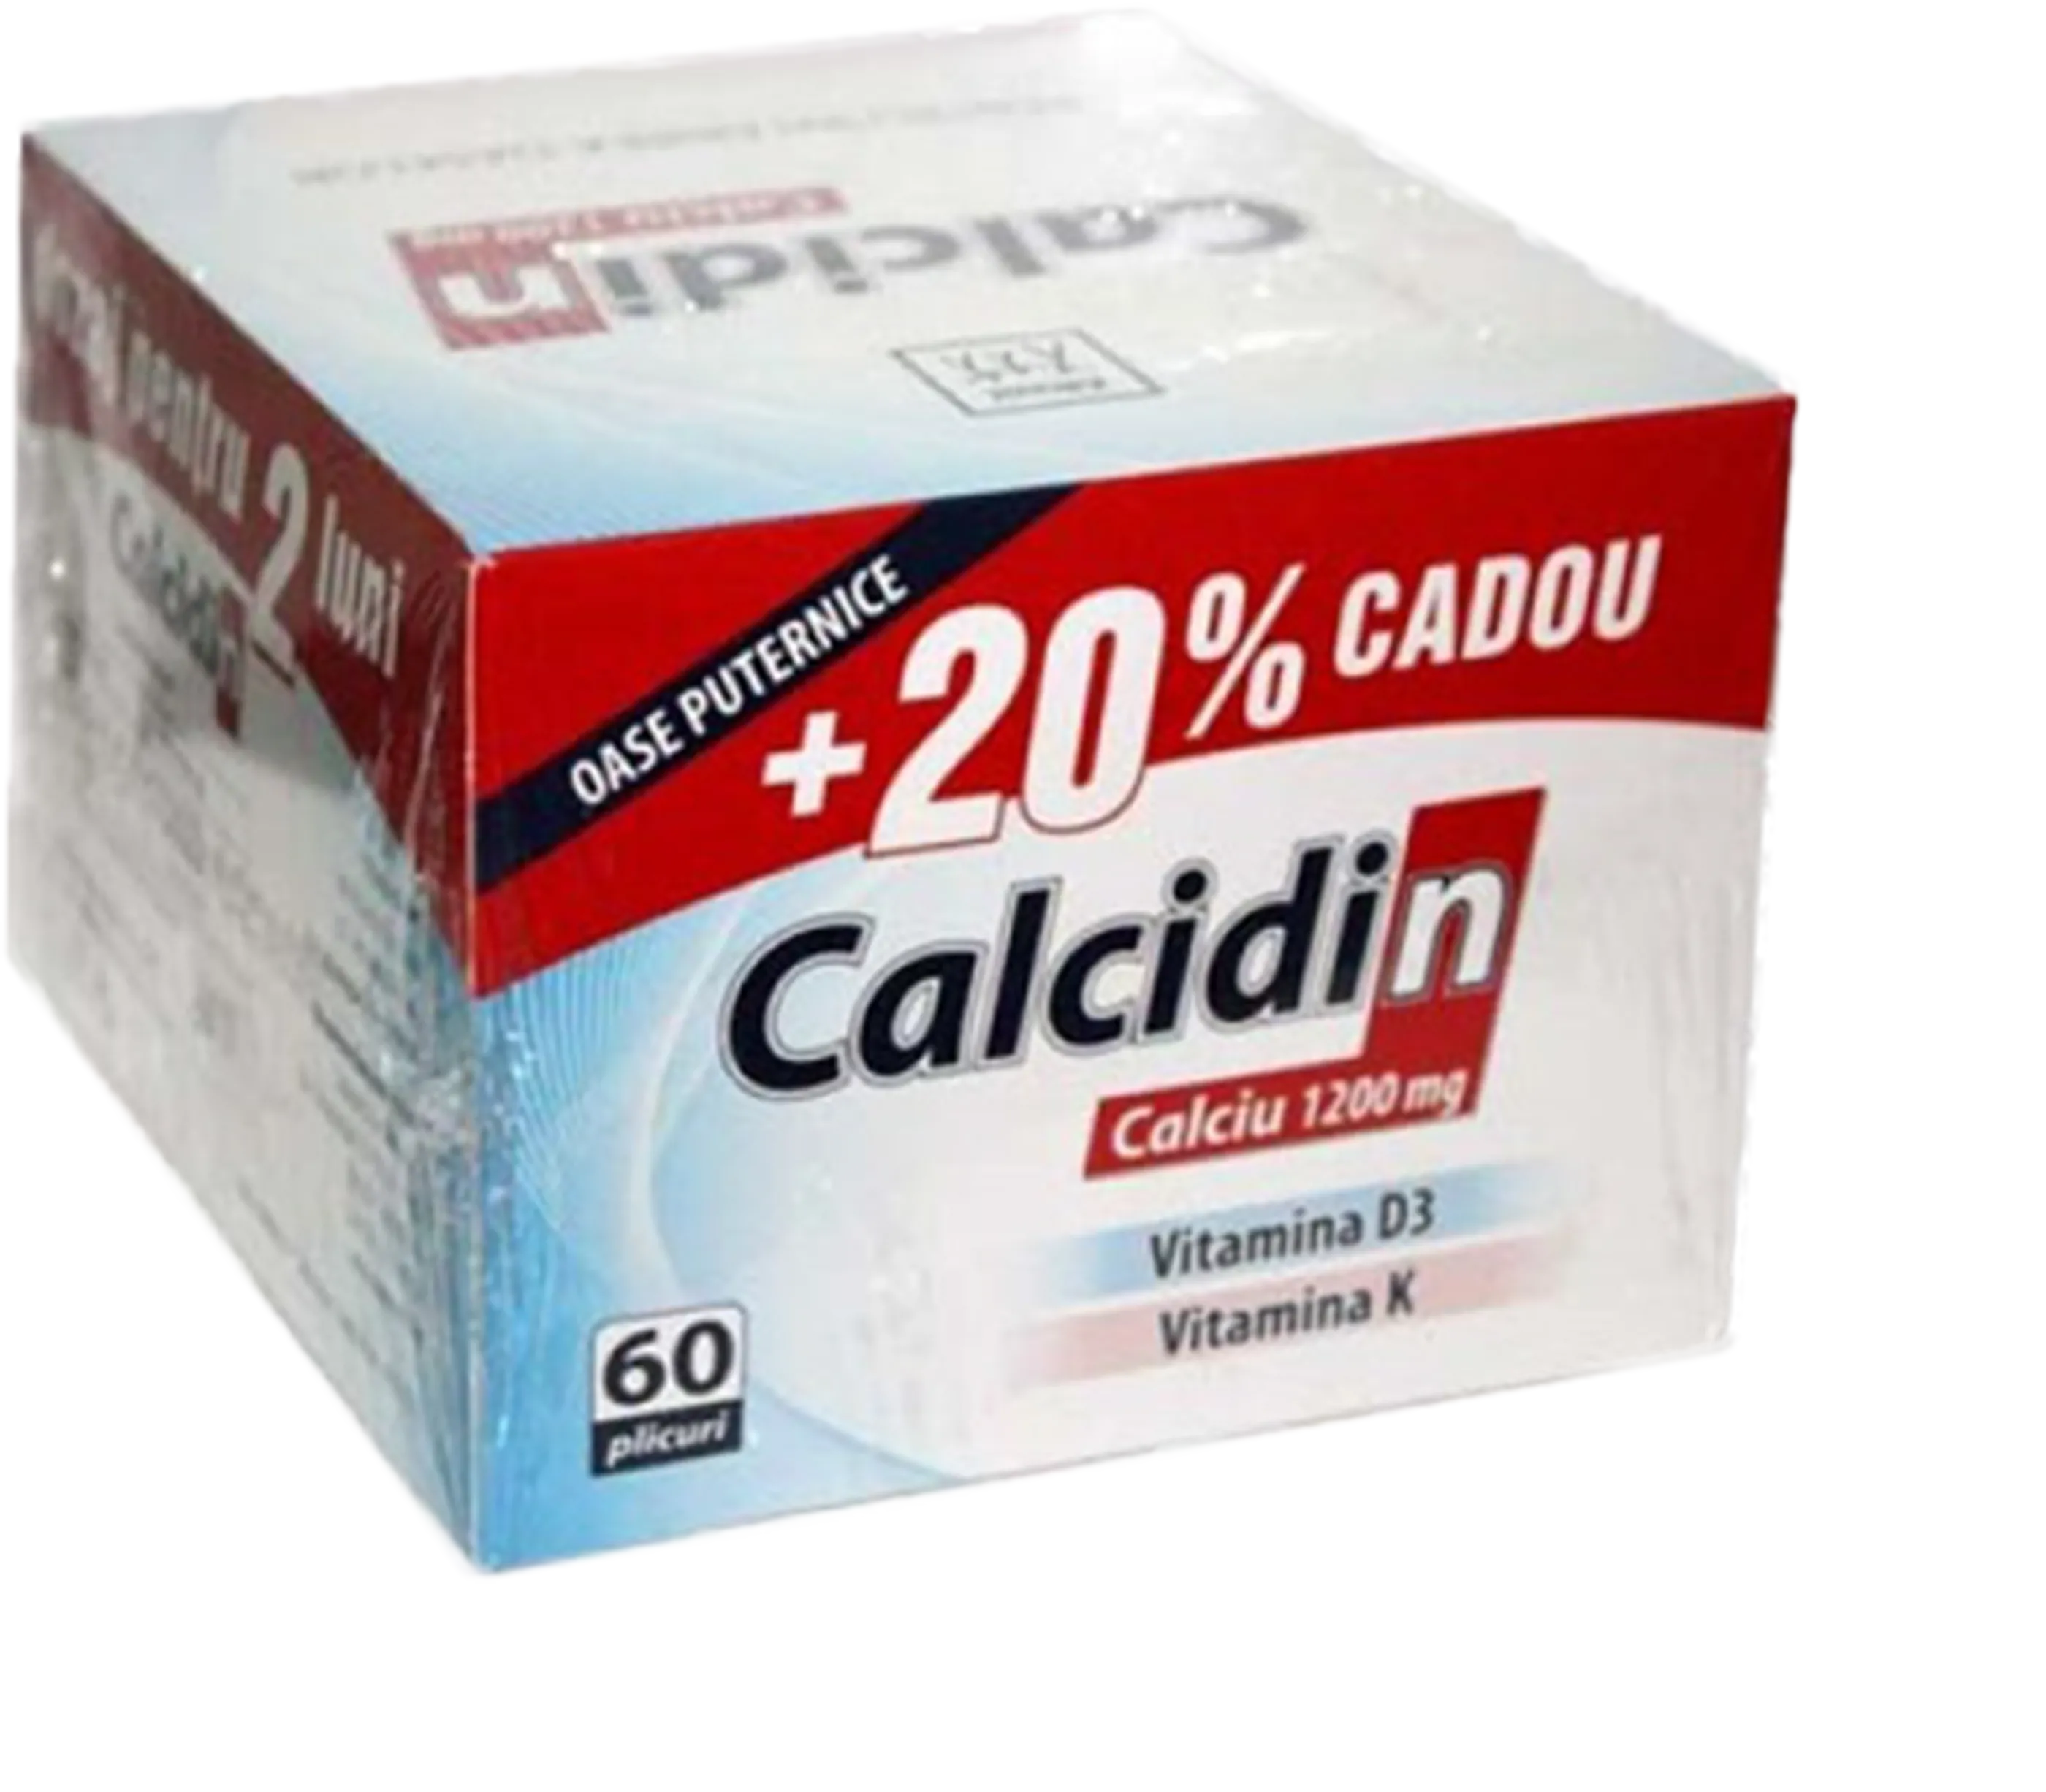 Multivitamine si minerale - Zdrovit Calcidin x 60 plicuri + 20% cadou, medik-on.ro